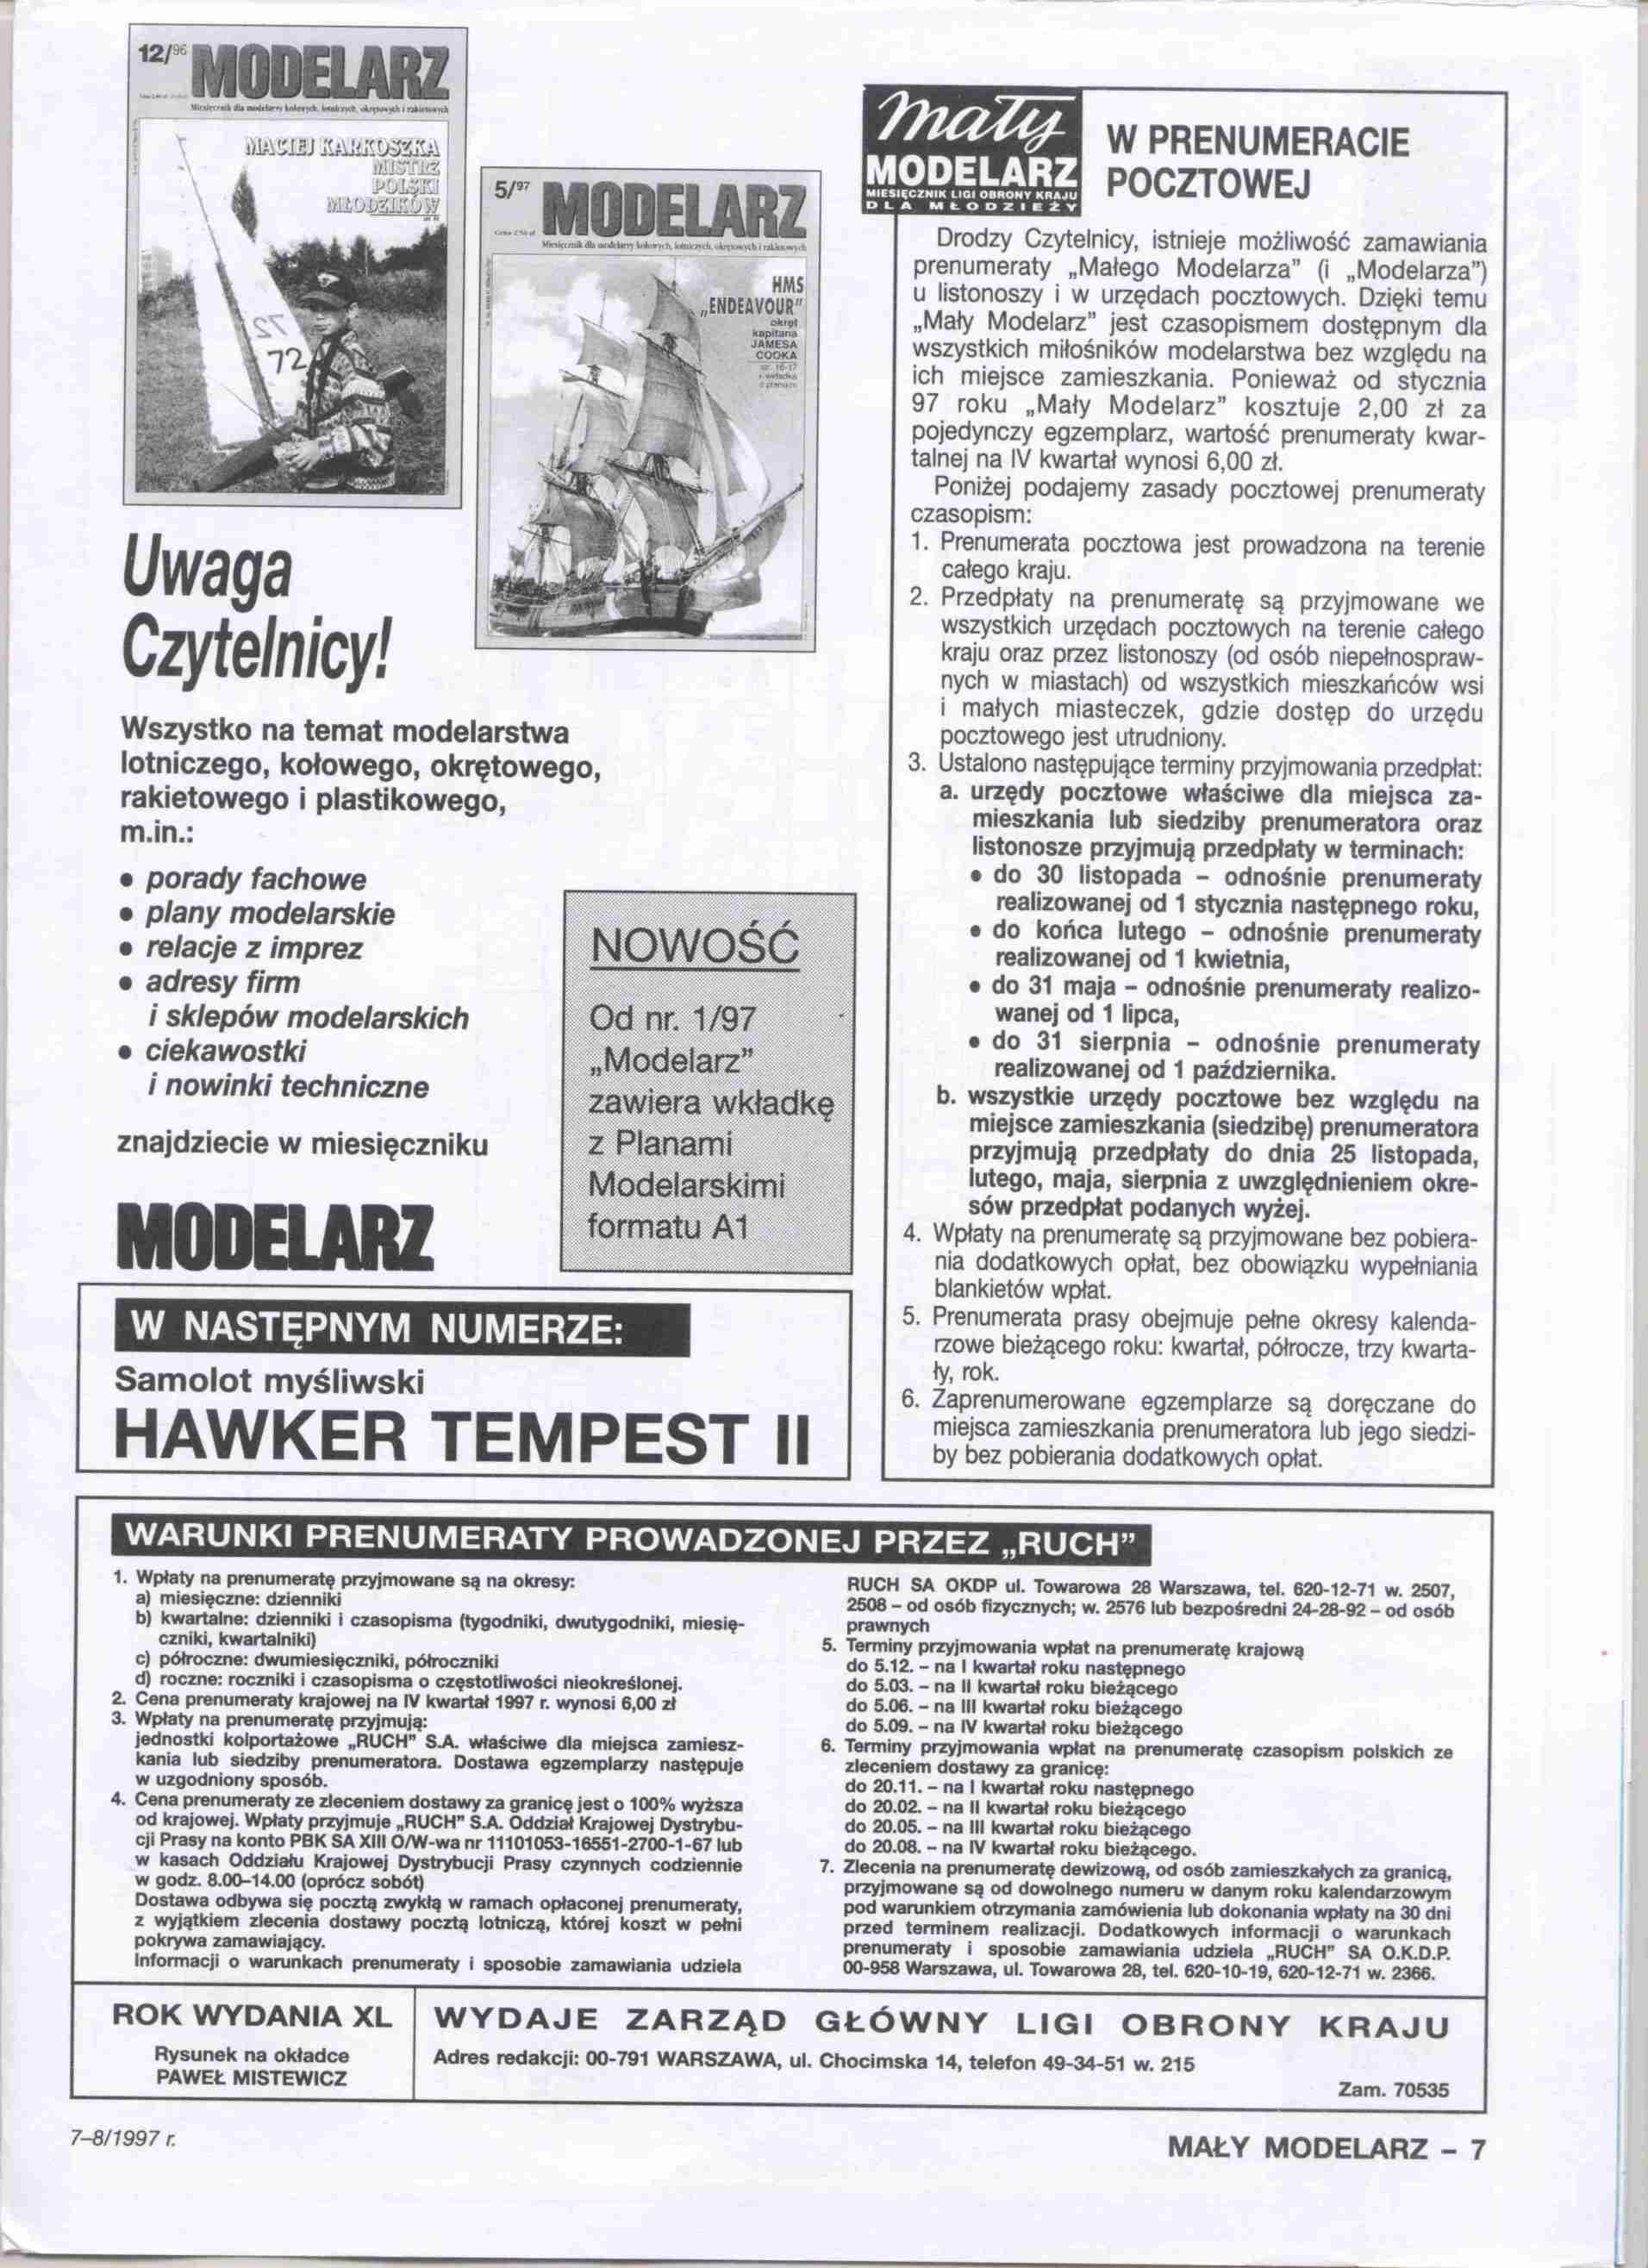 "Maly Modelarz" 7-8, 1997, 7 с.